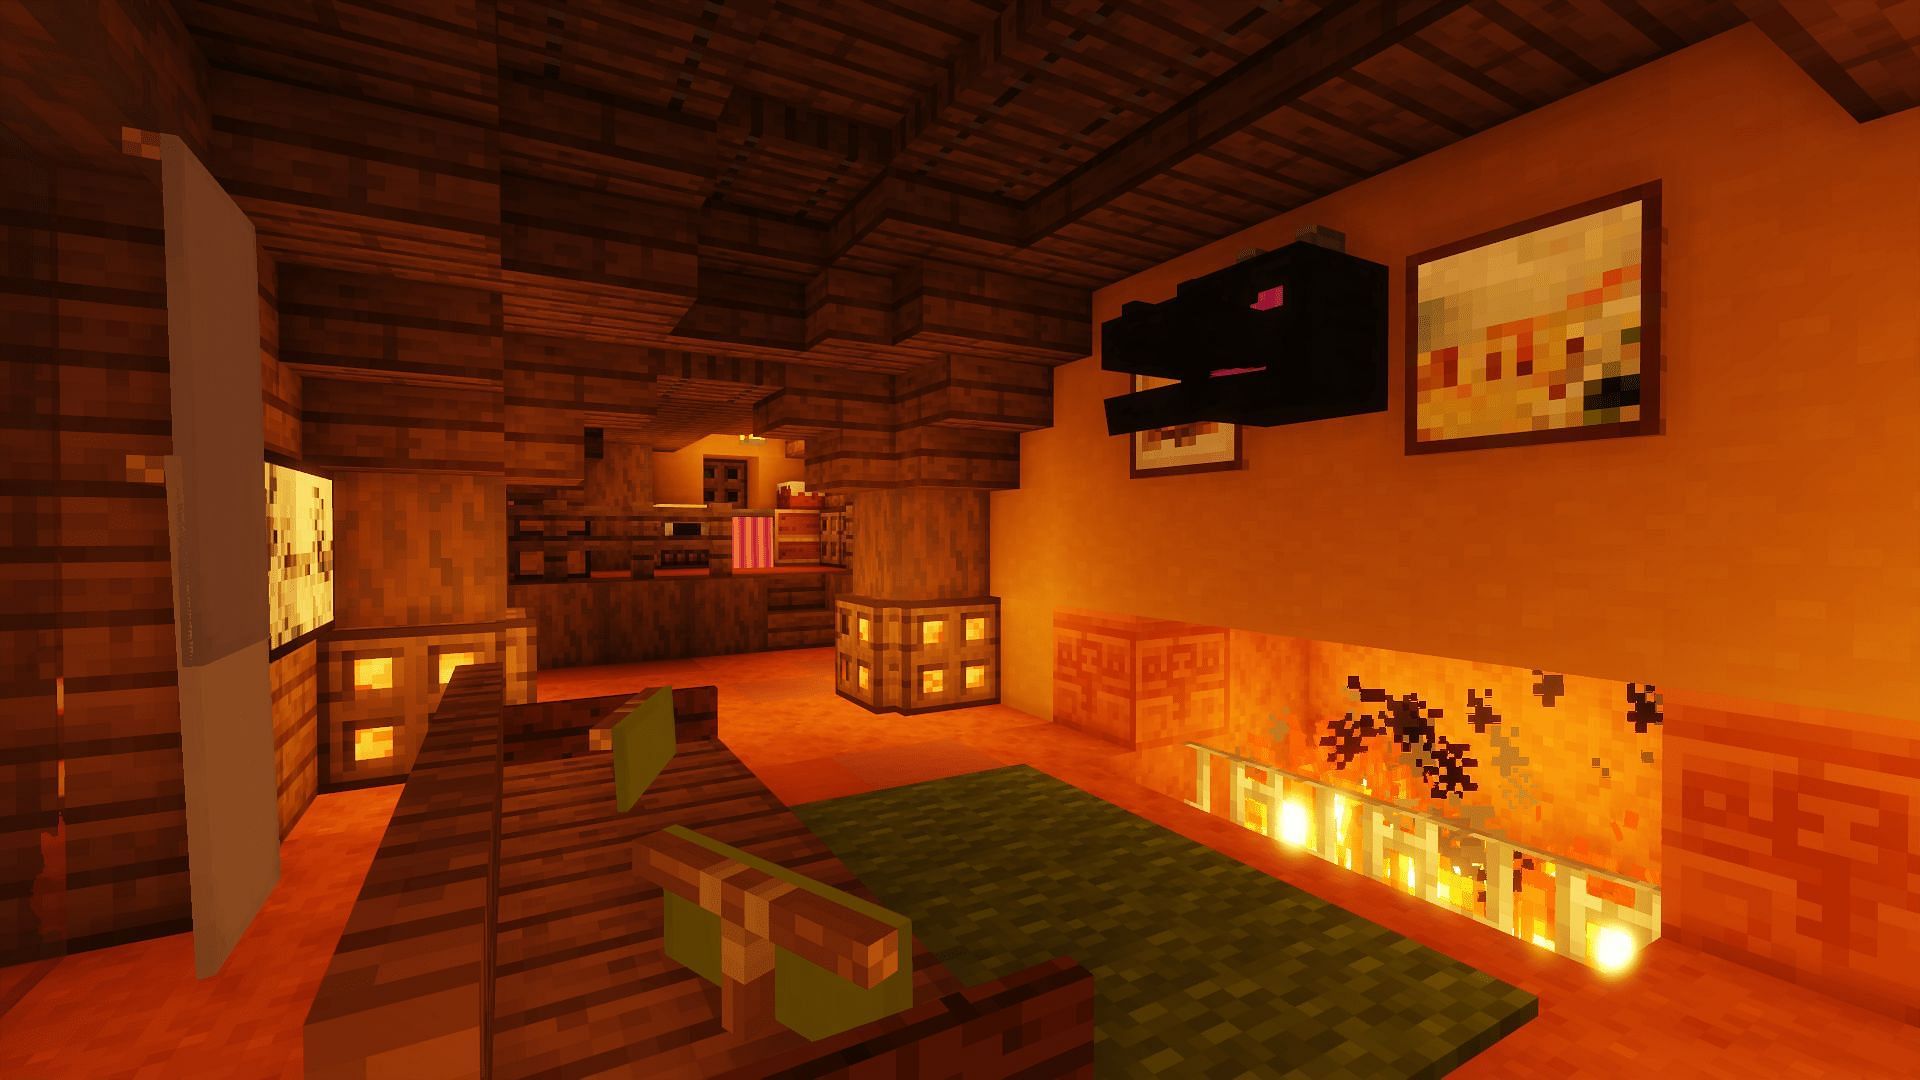 Fireplace in hobbit hole (Image via Reddit)